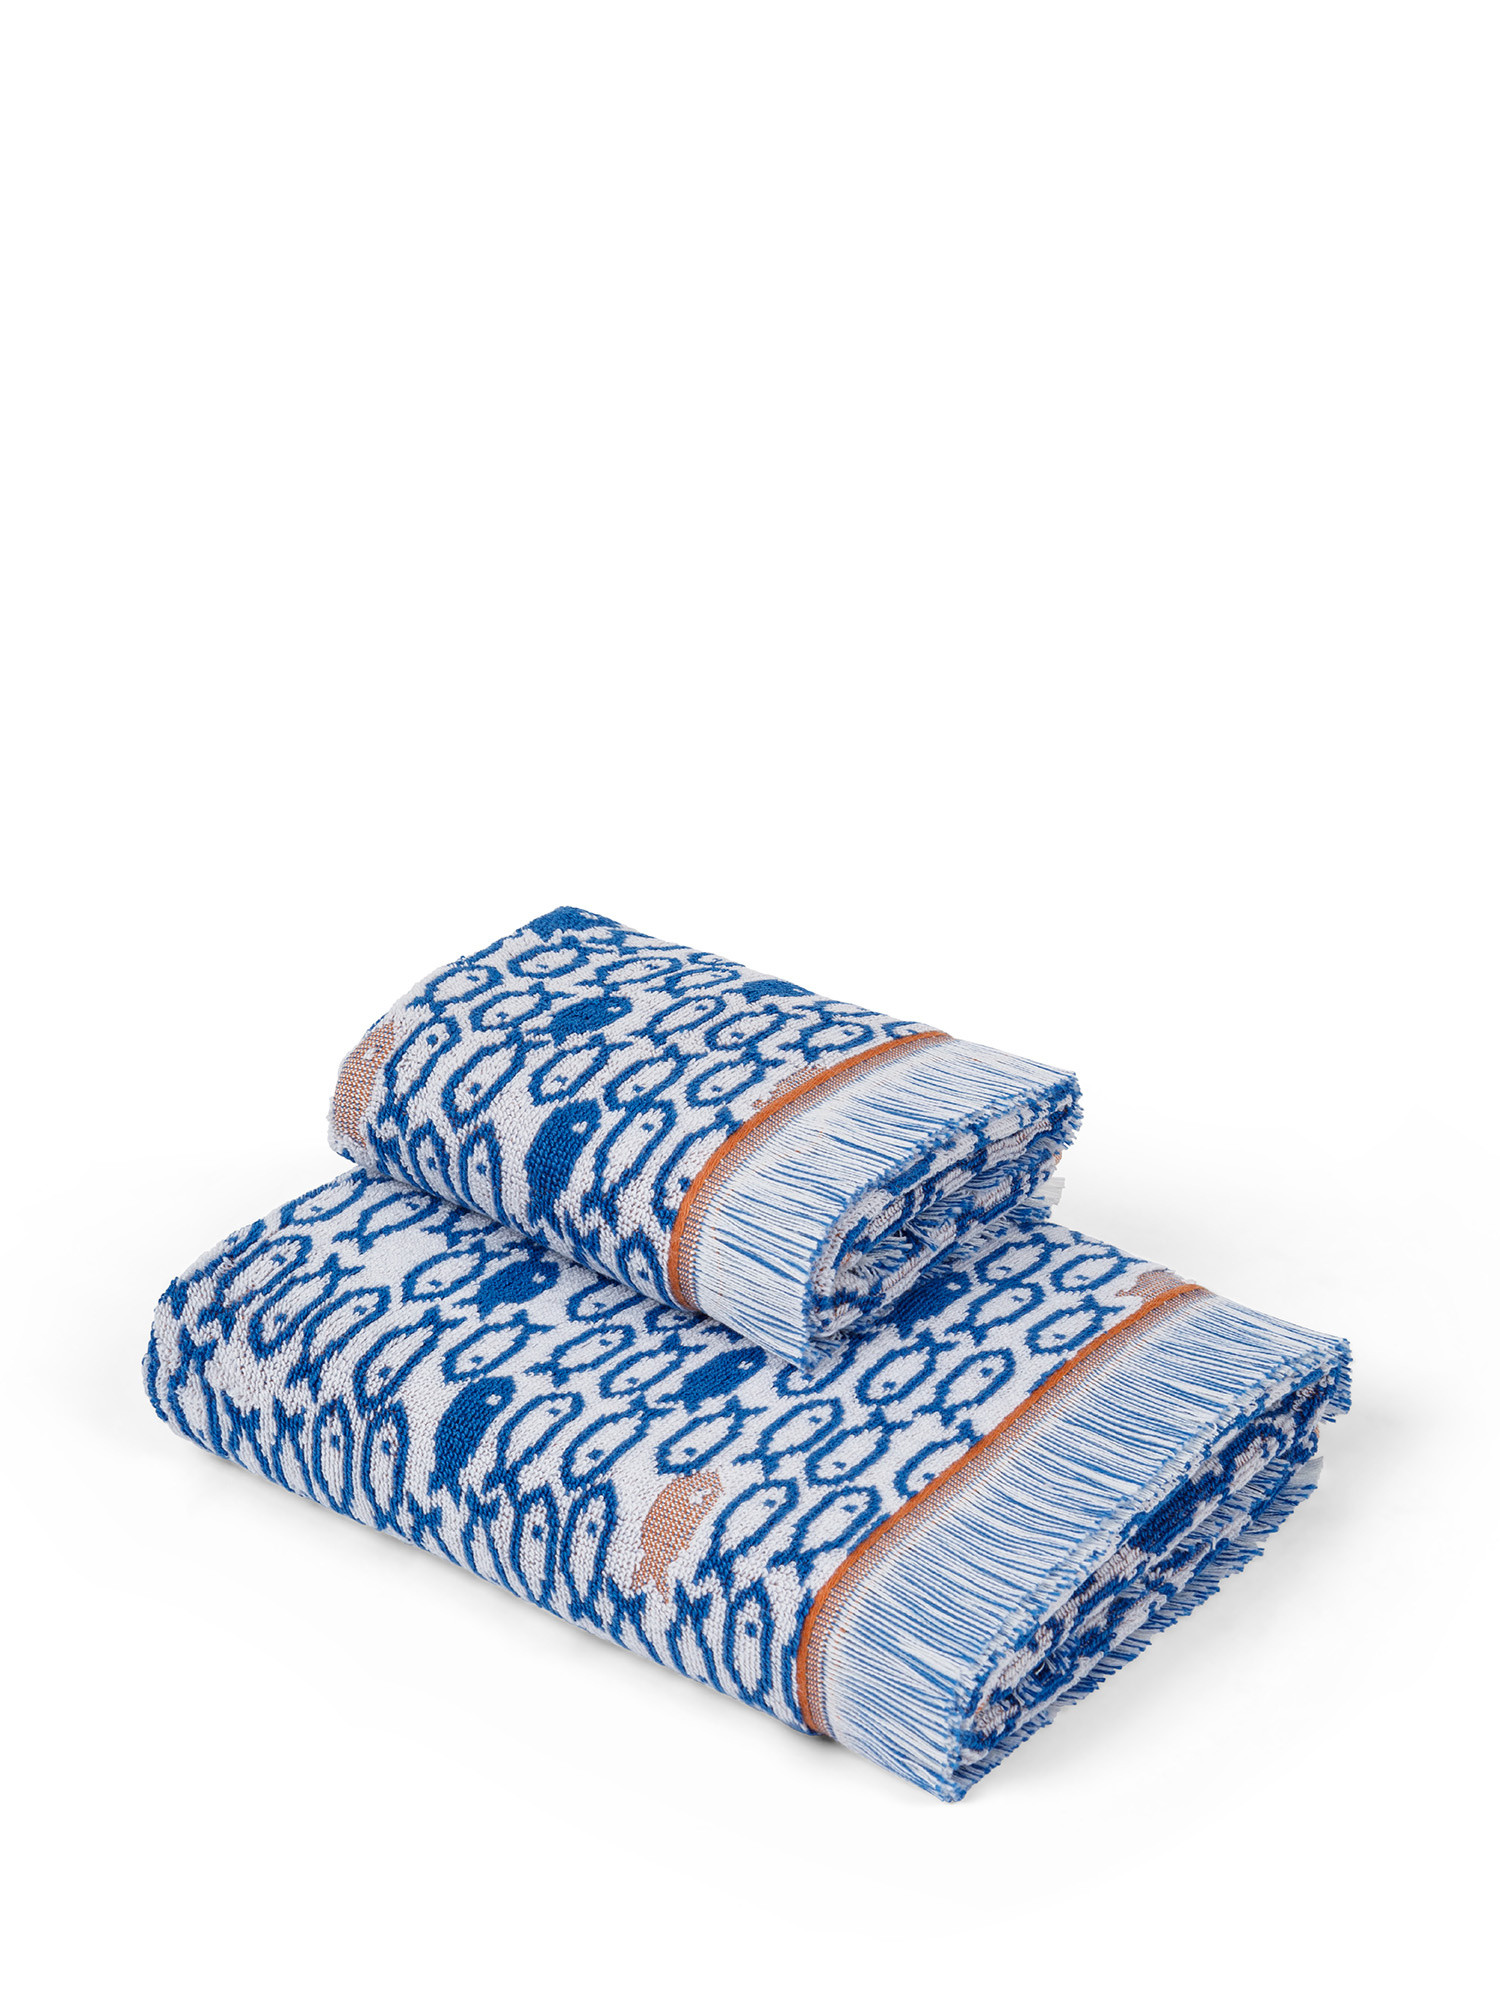 Asciugamano spugna di cotone motivo pesci, Blu, large image number 0